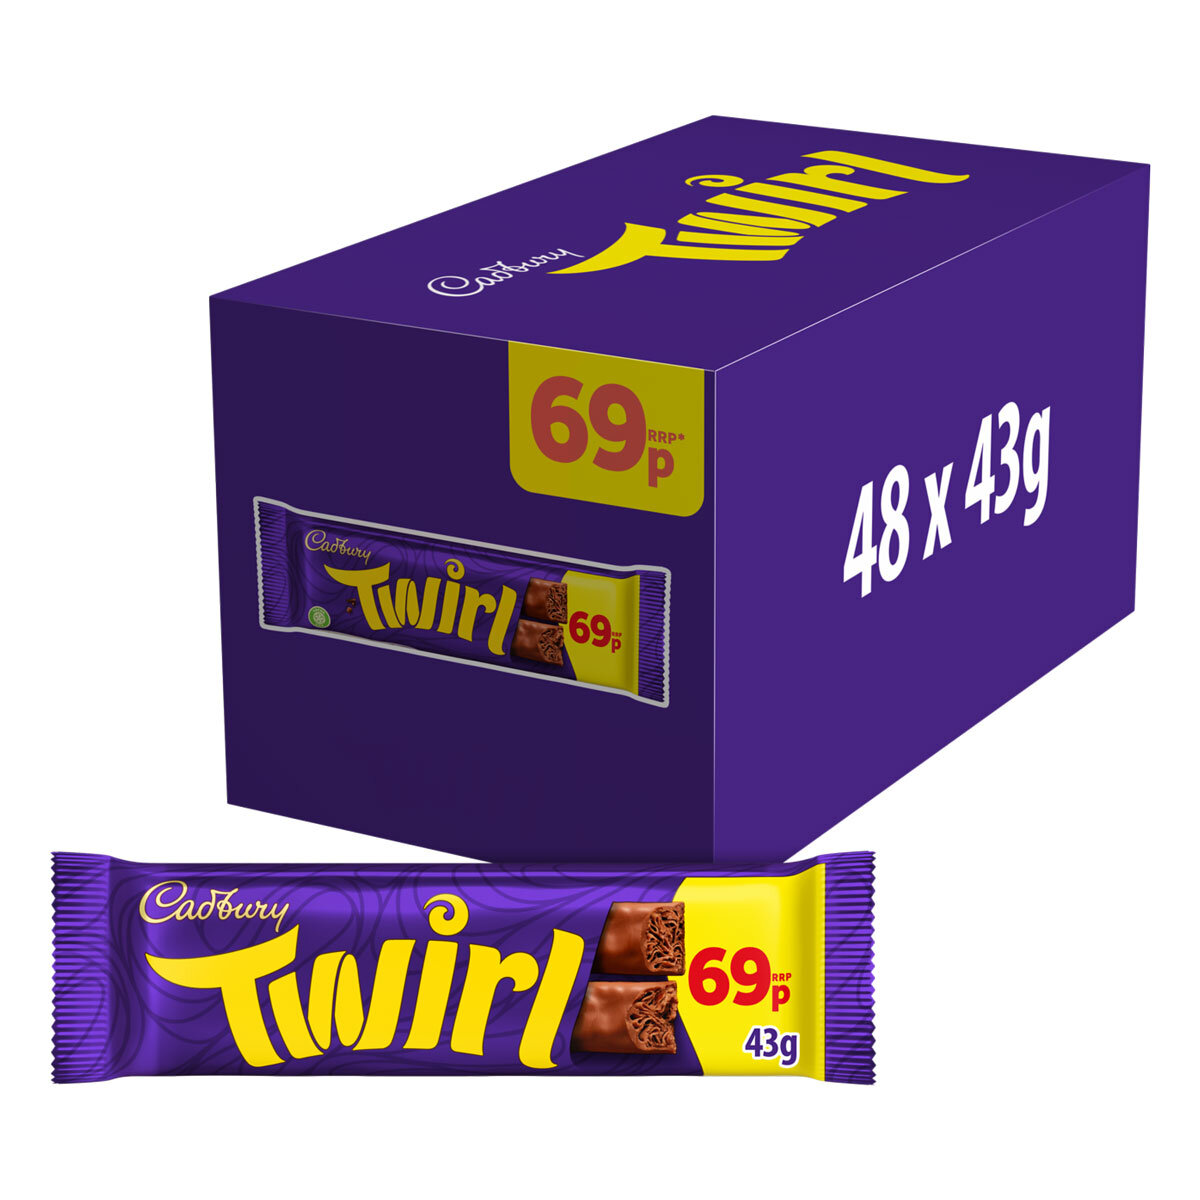 Cadbury Twirl PMP 69p, 48 x 43g